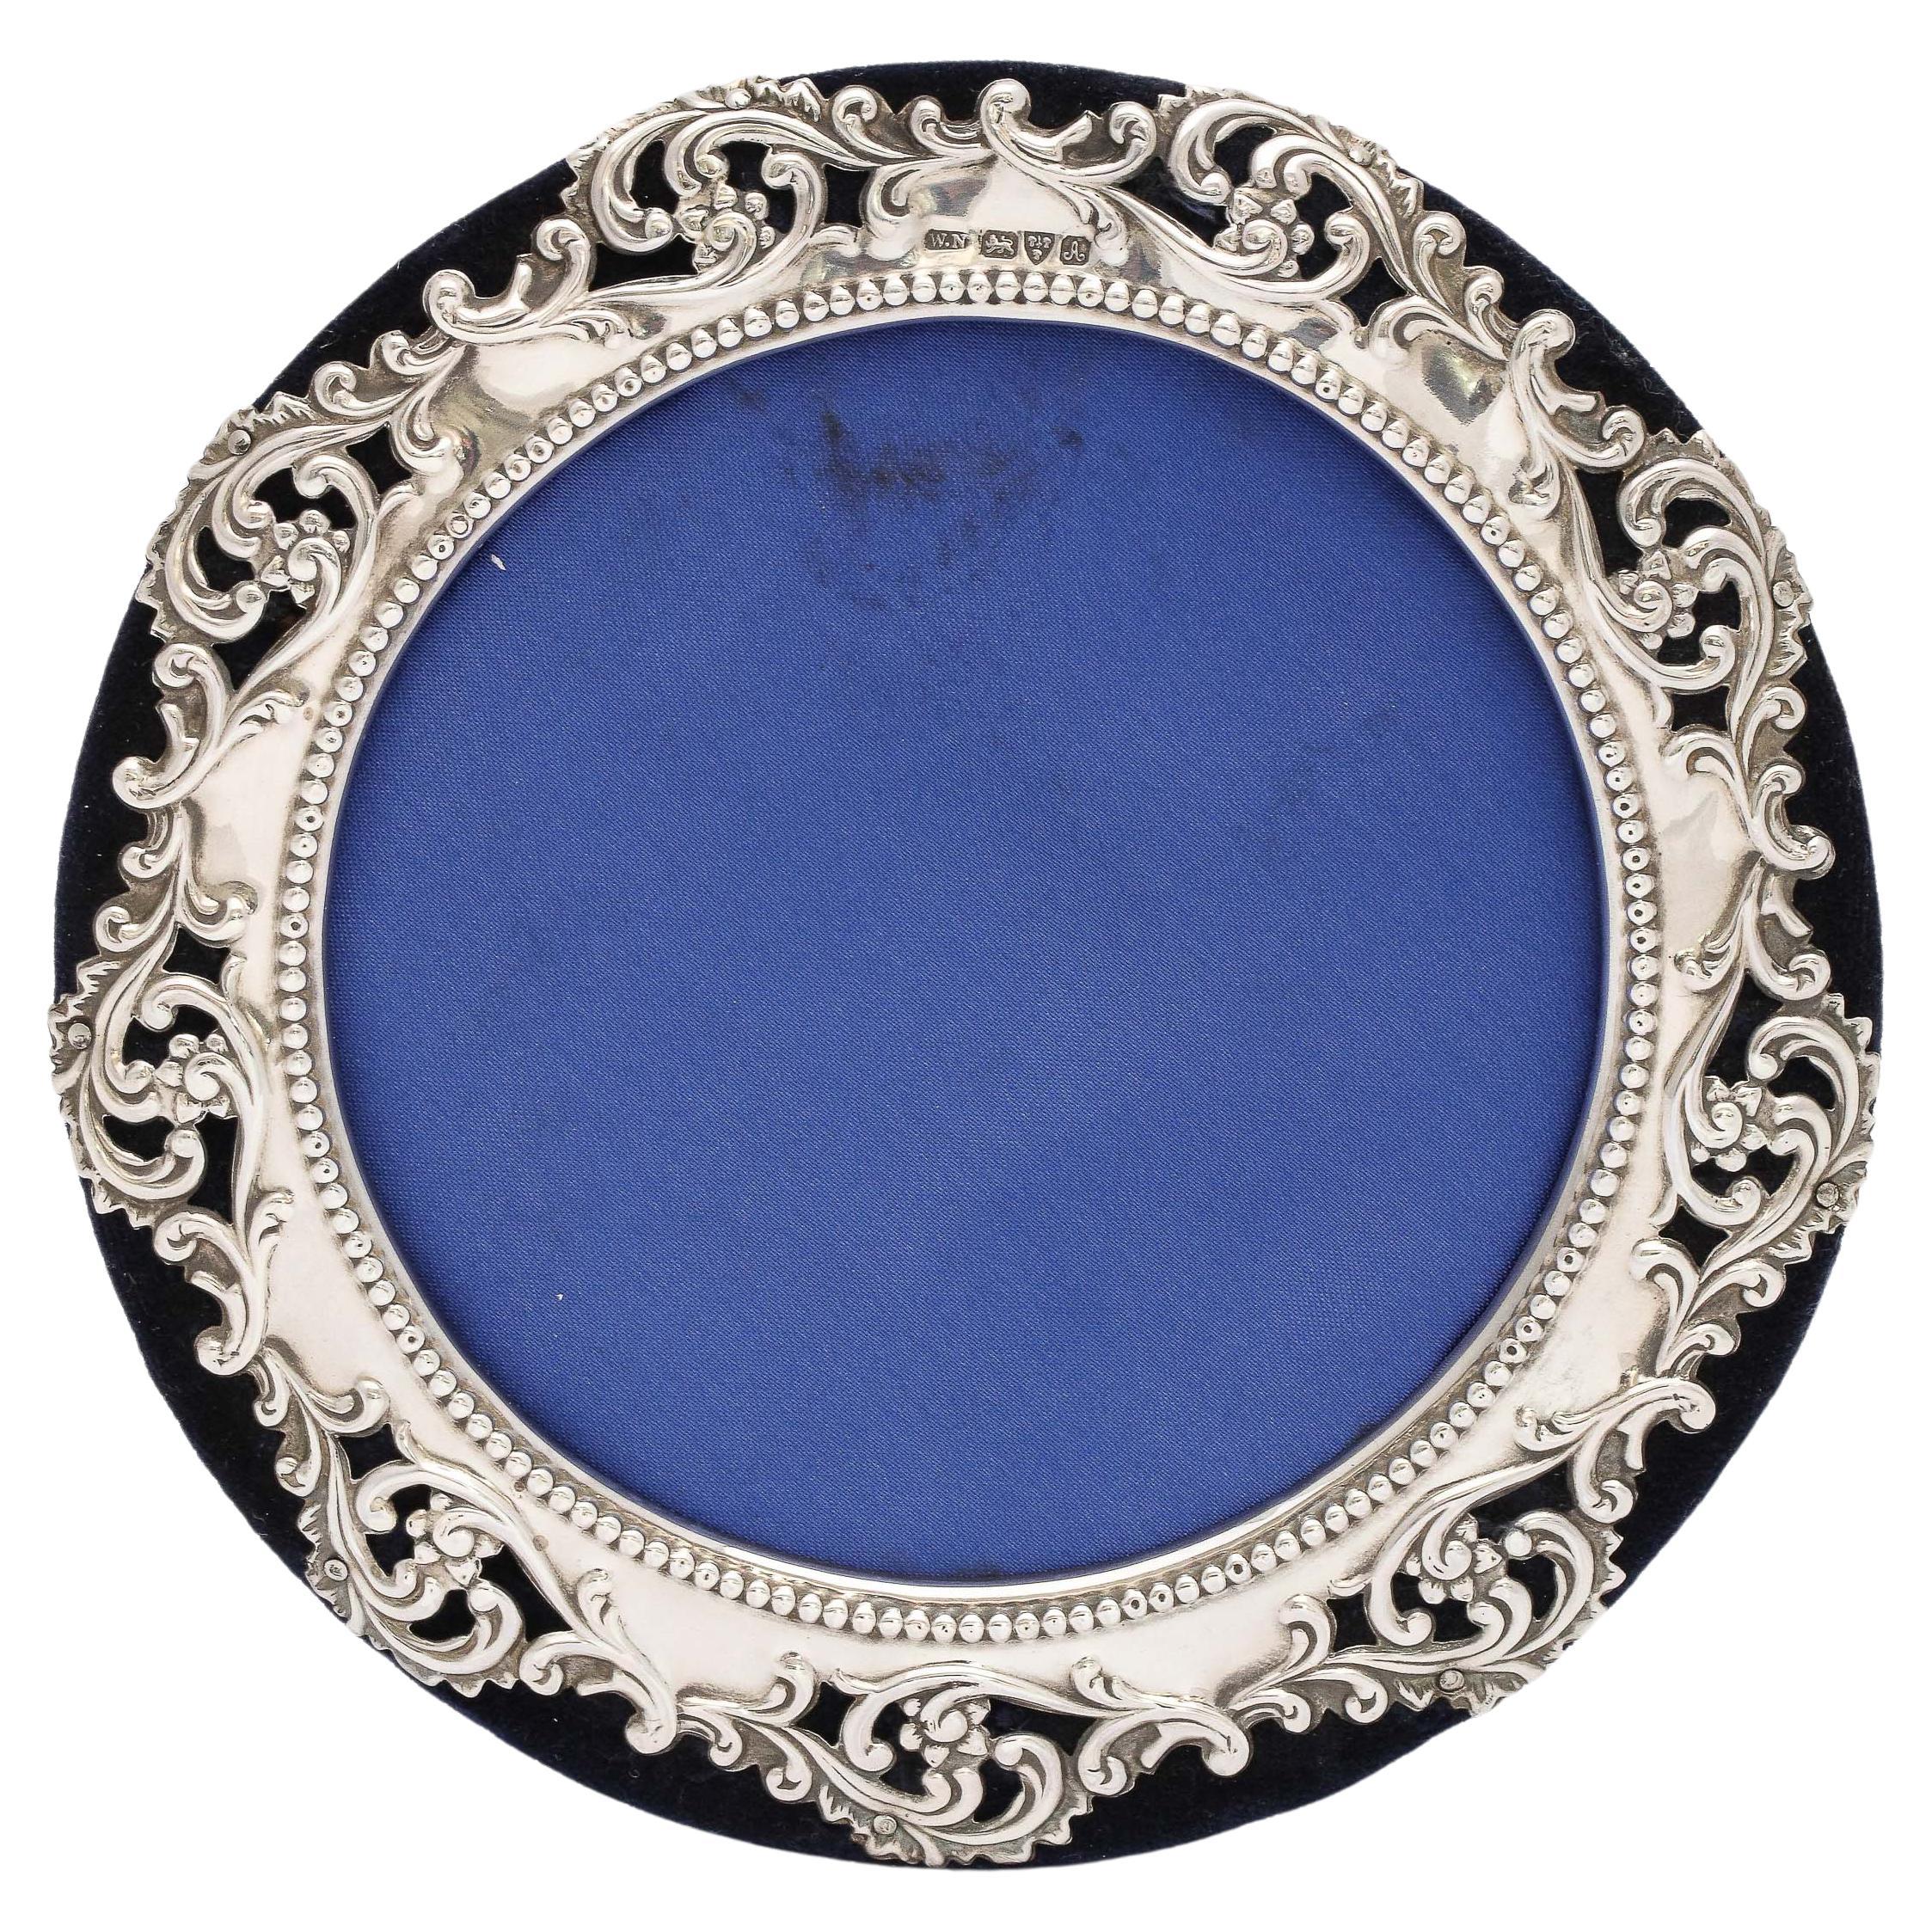 Edwardian Sterling Silver Round Picture Frame Mounted on Dark Blue Velvet